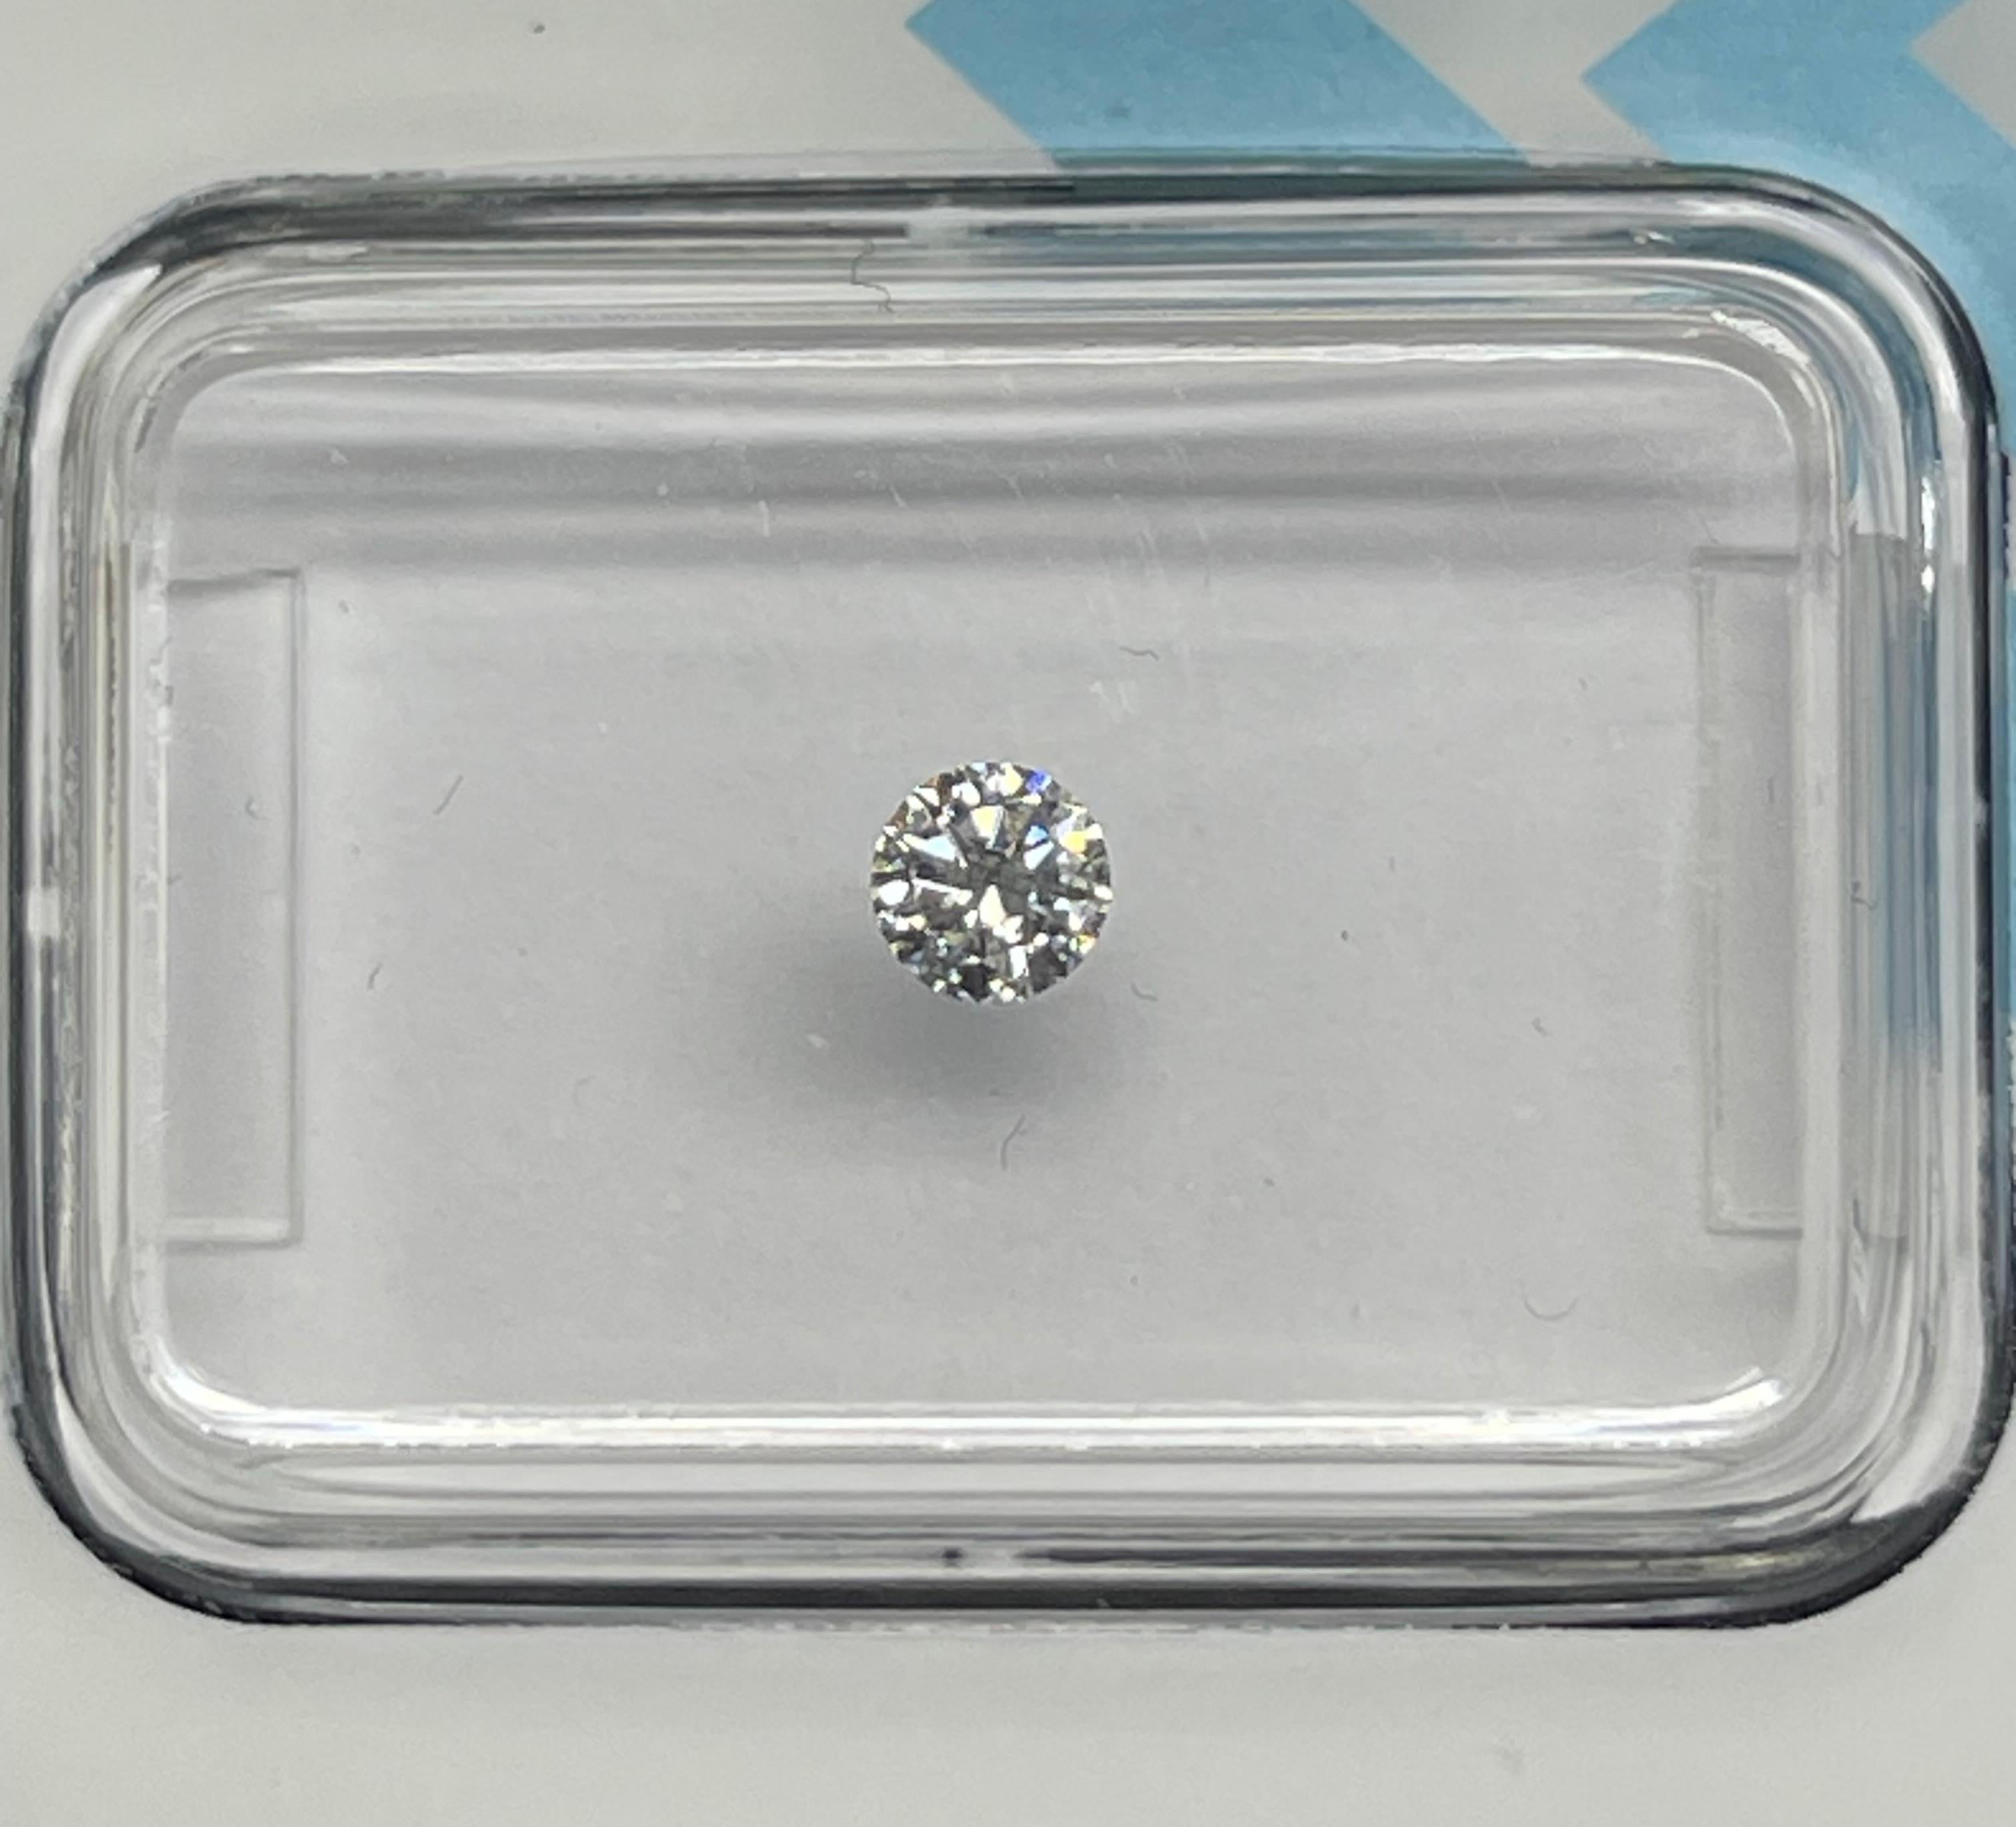 Natural Diamond graded by IGI.

Shape: Round Brilliant
Weight: 0.15 CT
Color: D
Clarity: VVS2
Cut: Very Good
Polish: Excellent
Symmetry: Excellent
Fluorescence: None
Laser inscription : IGI 630434199